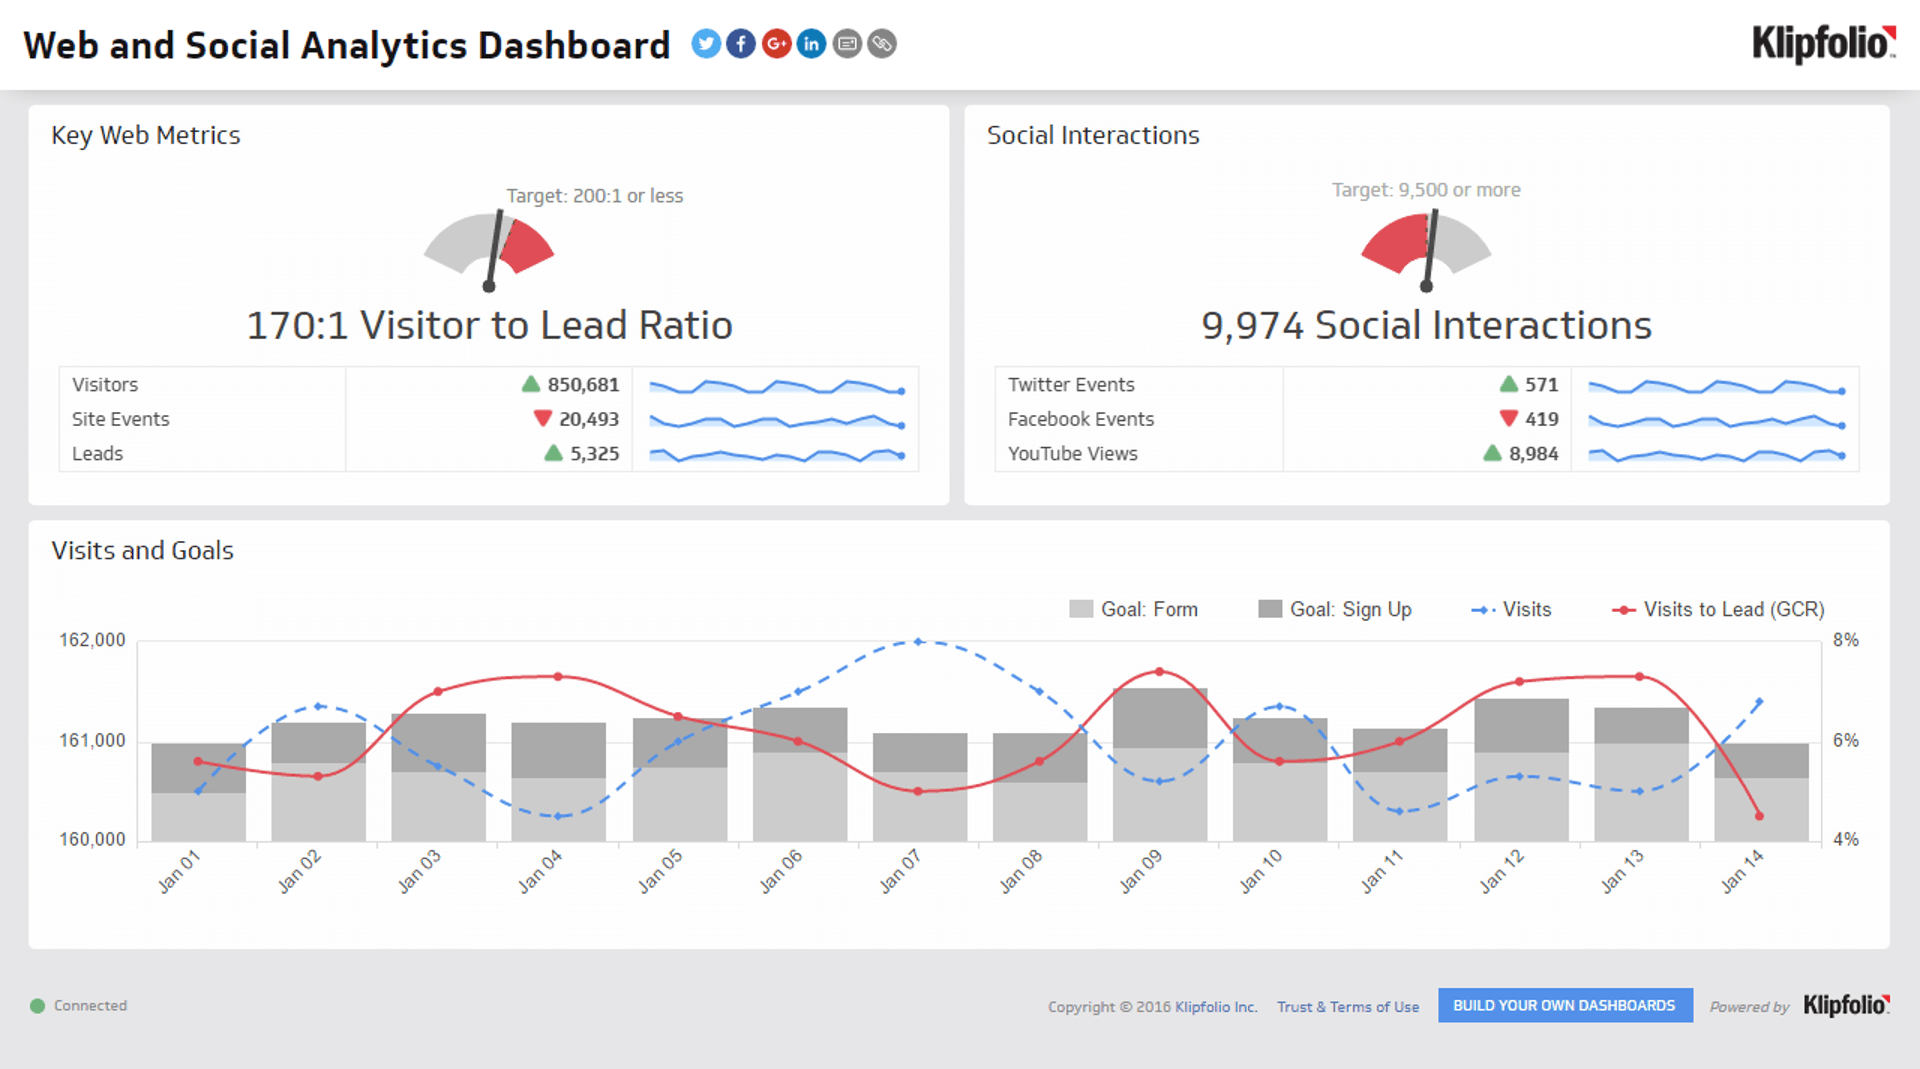 Marketing Dashboard Examples - Web and Social Analytics Dashboard